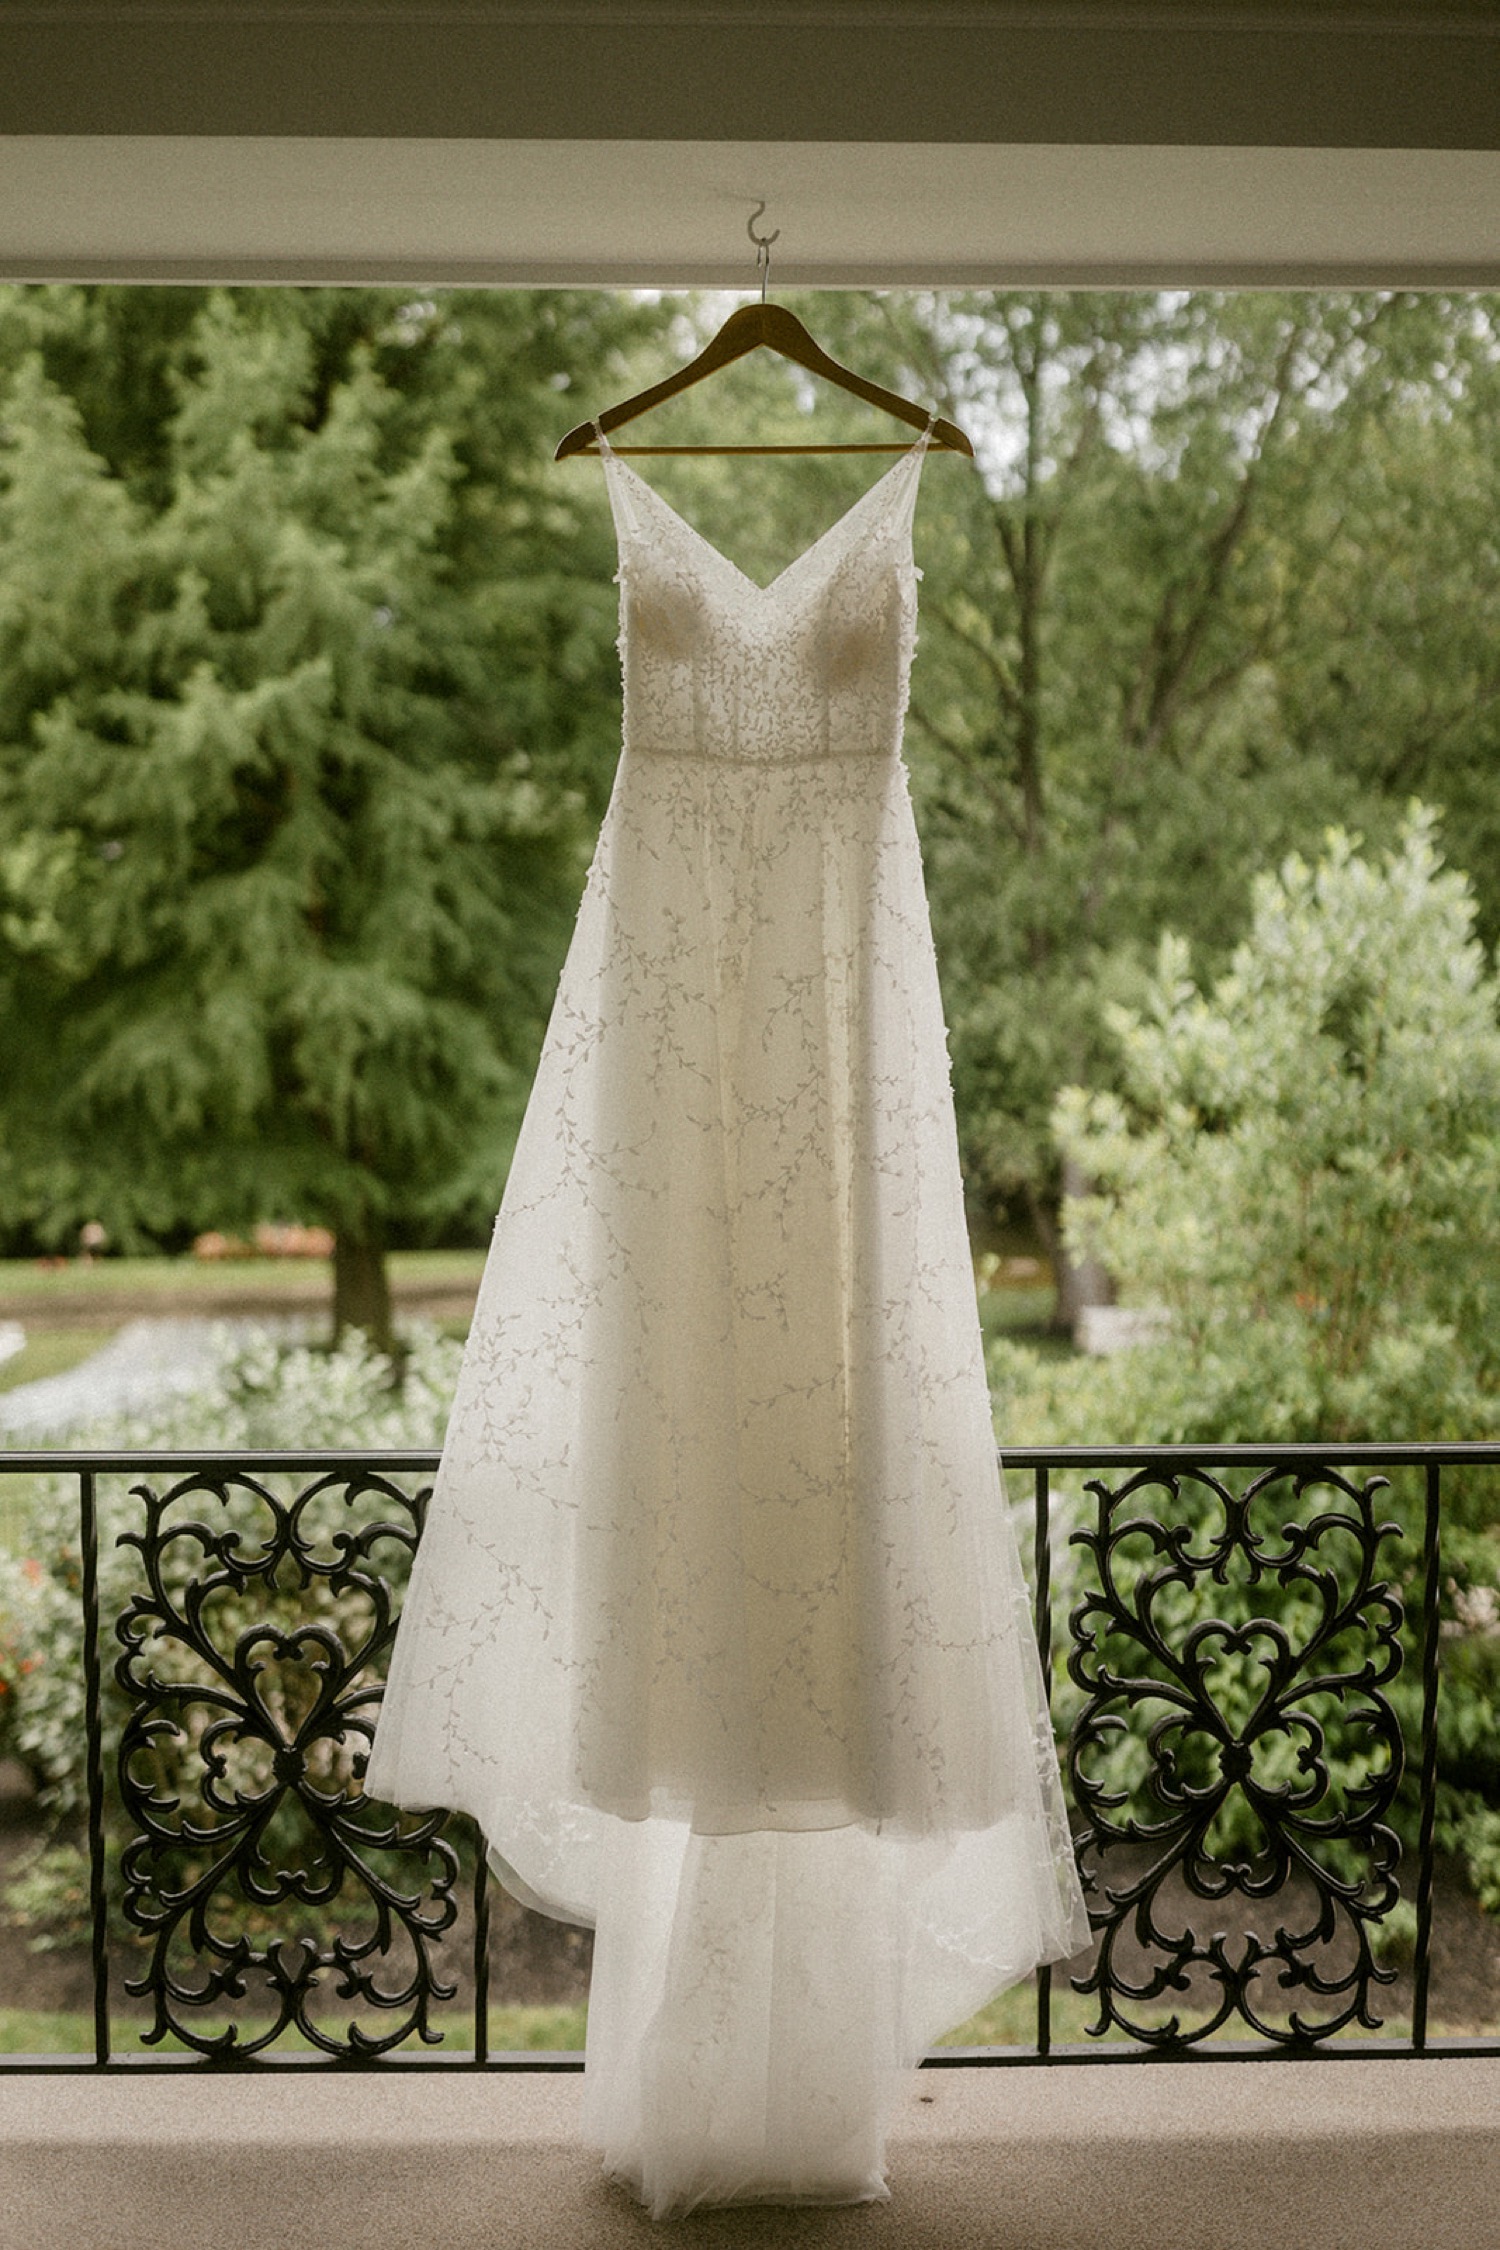 wedding dress hanging outside on hanger